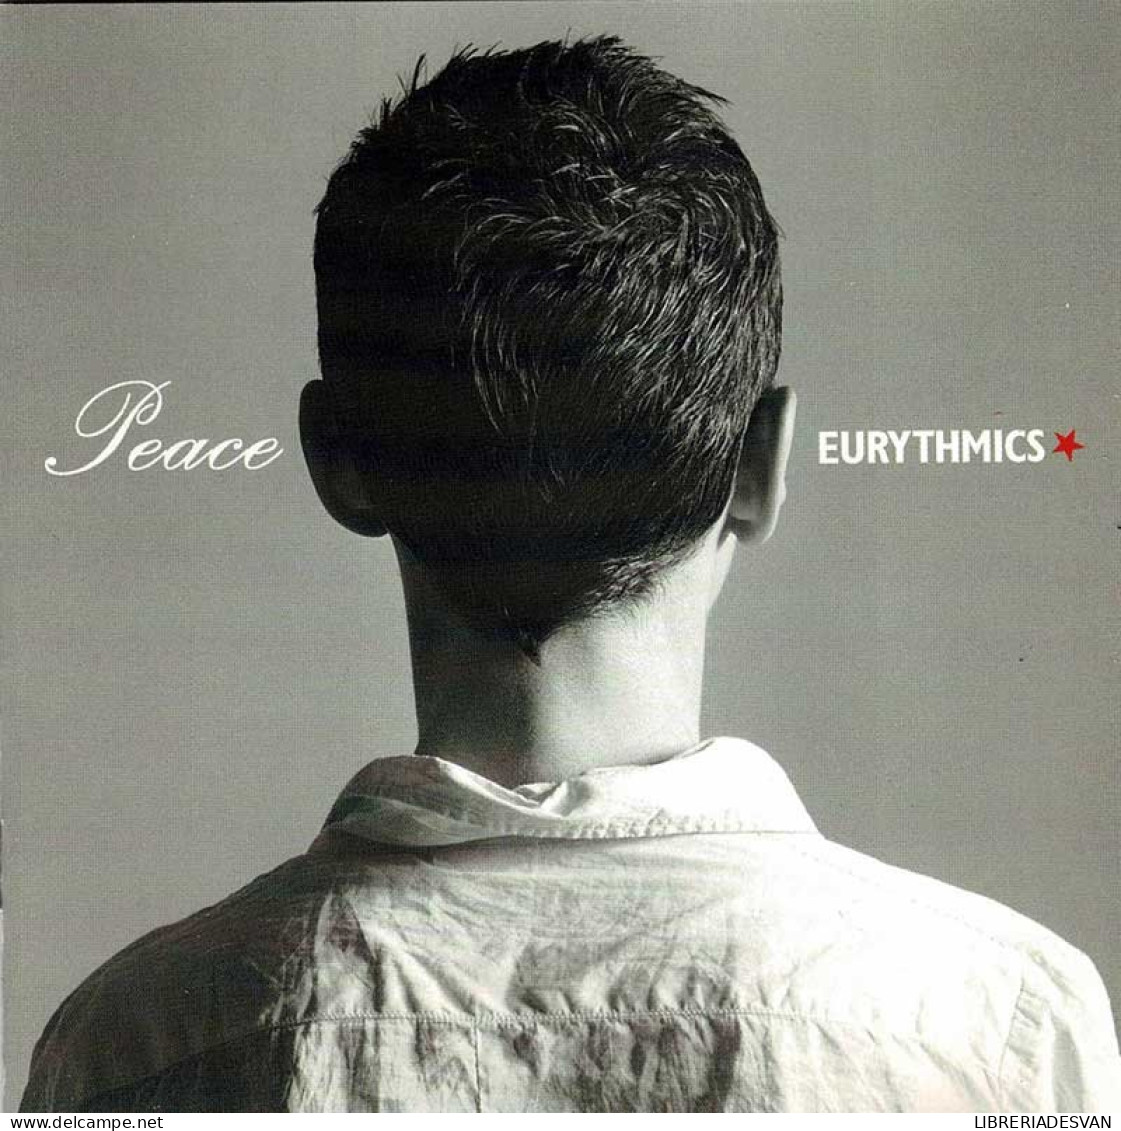 Eurythmics - Peace. CD - Disco, Pop